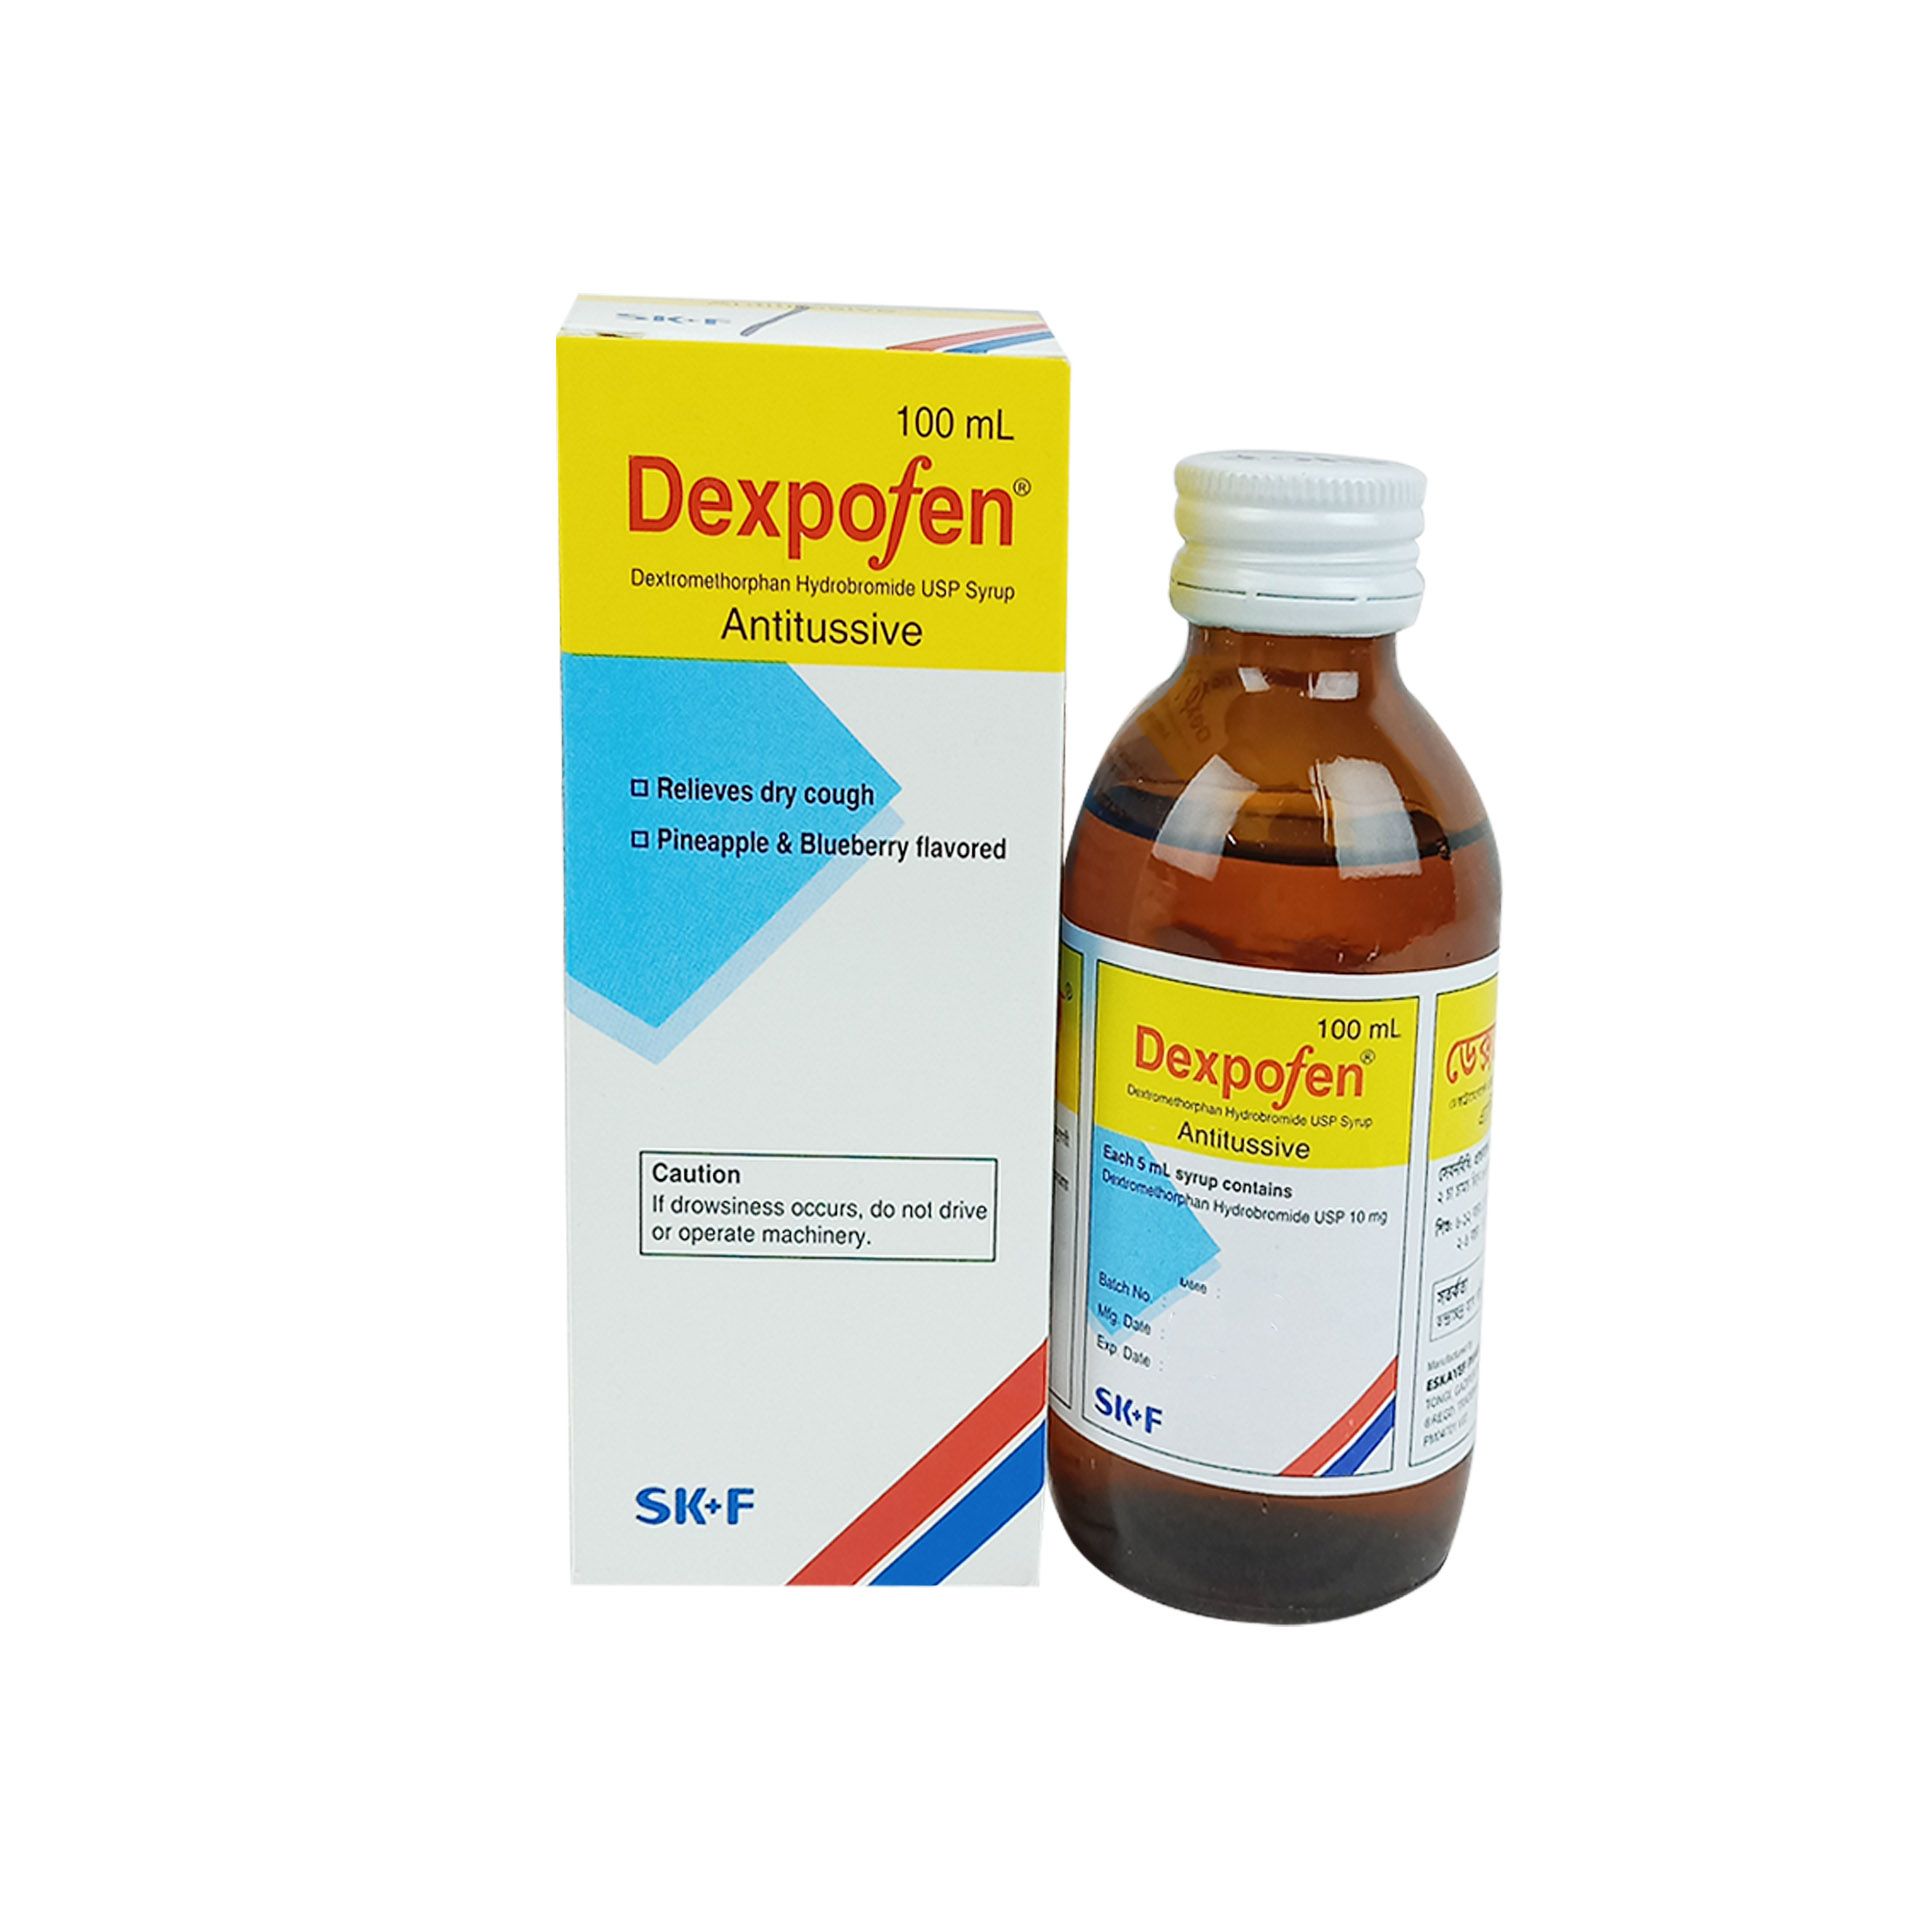 Dexpofen 10mg/5ml Syrup